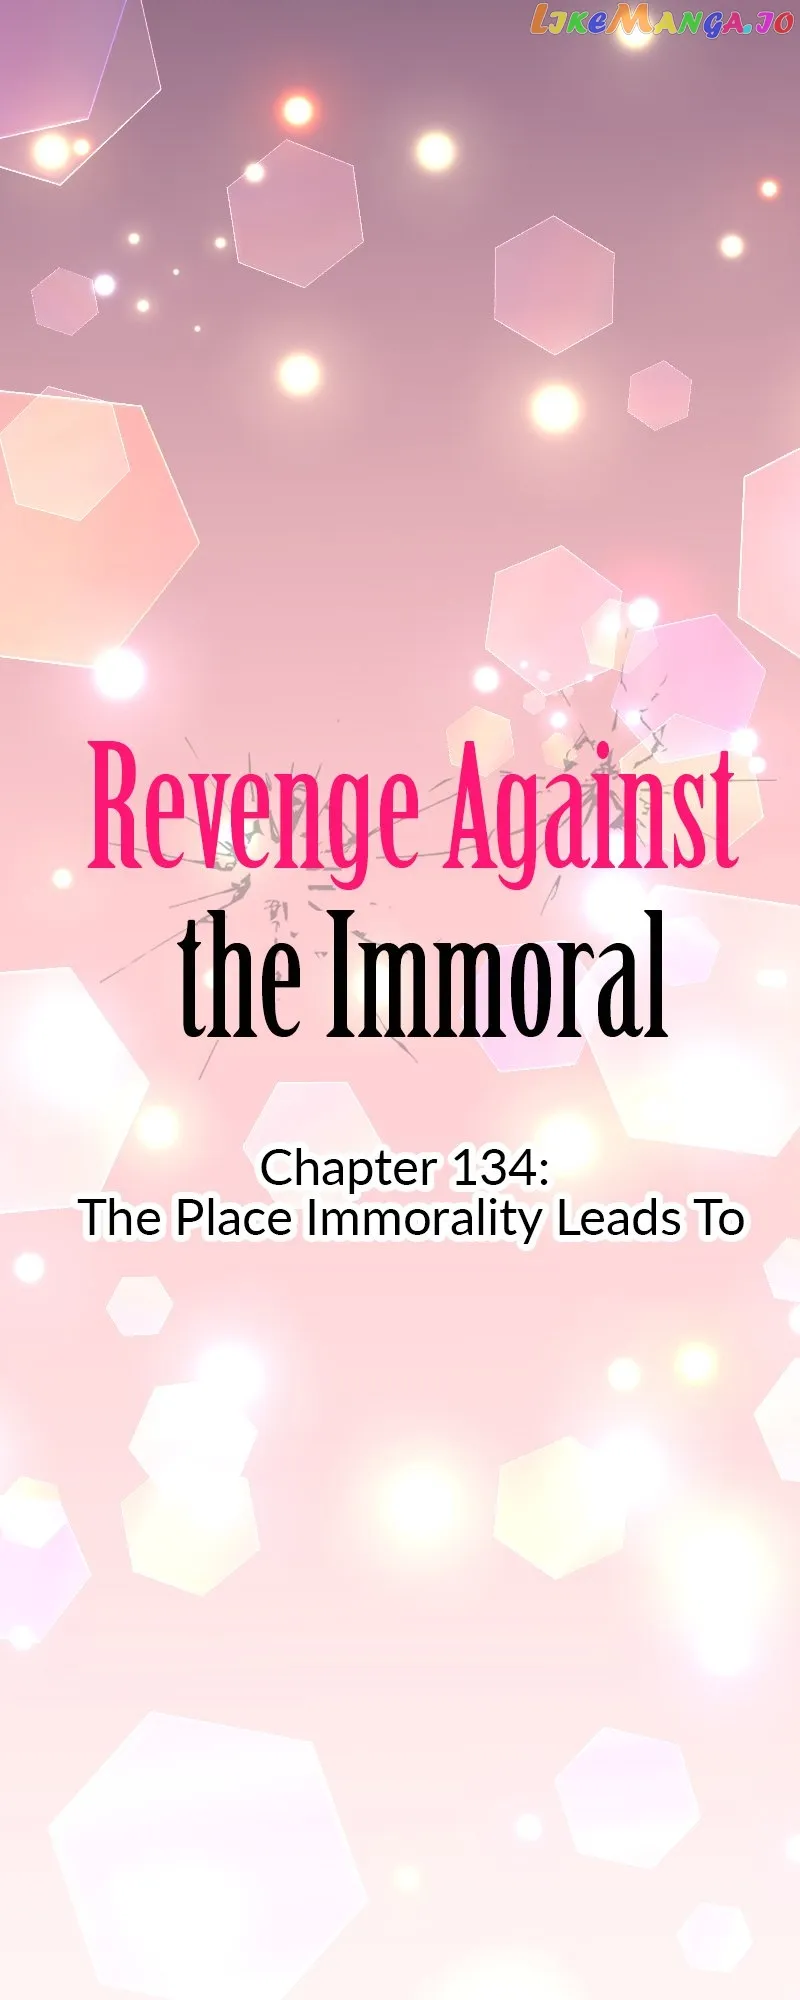 Revenge Against the Immoral chapter 134